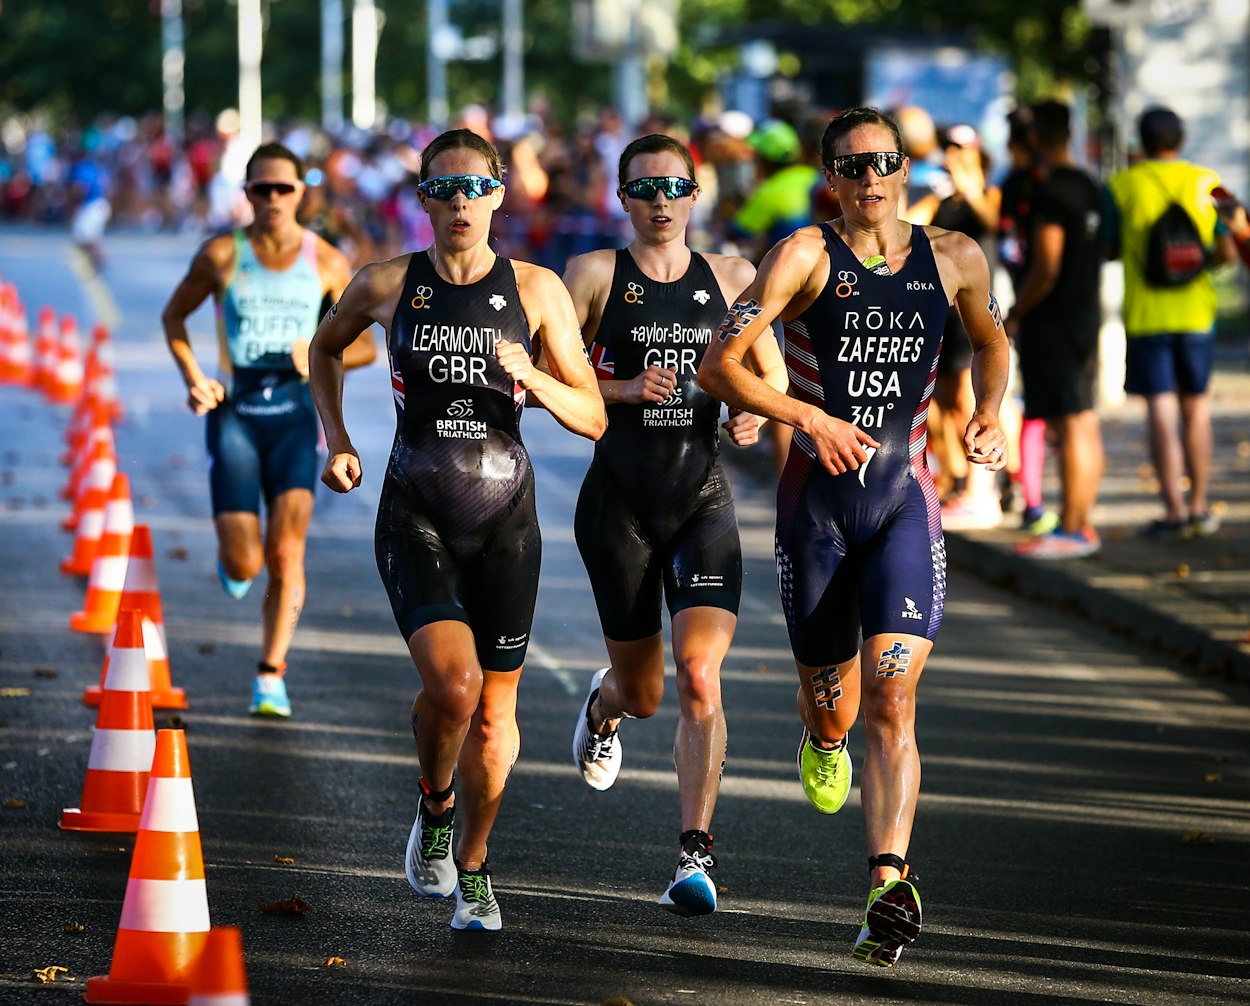 The power of women’s movement in World Triathlon